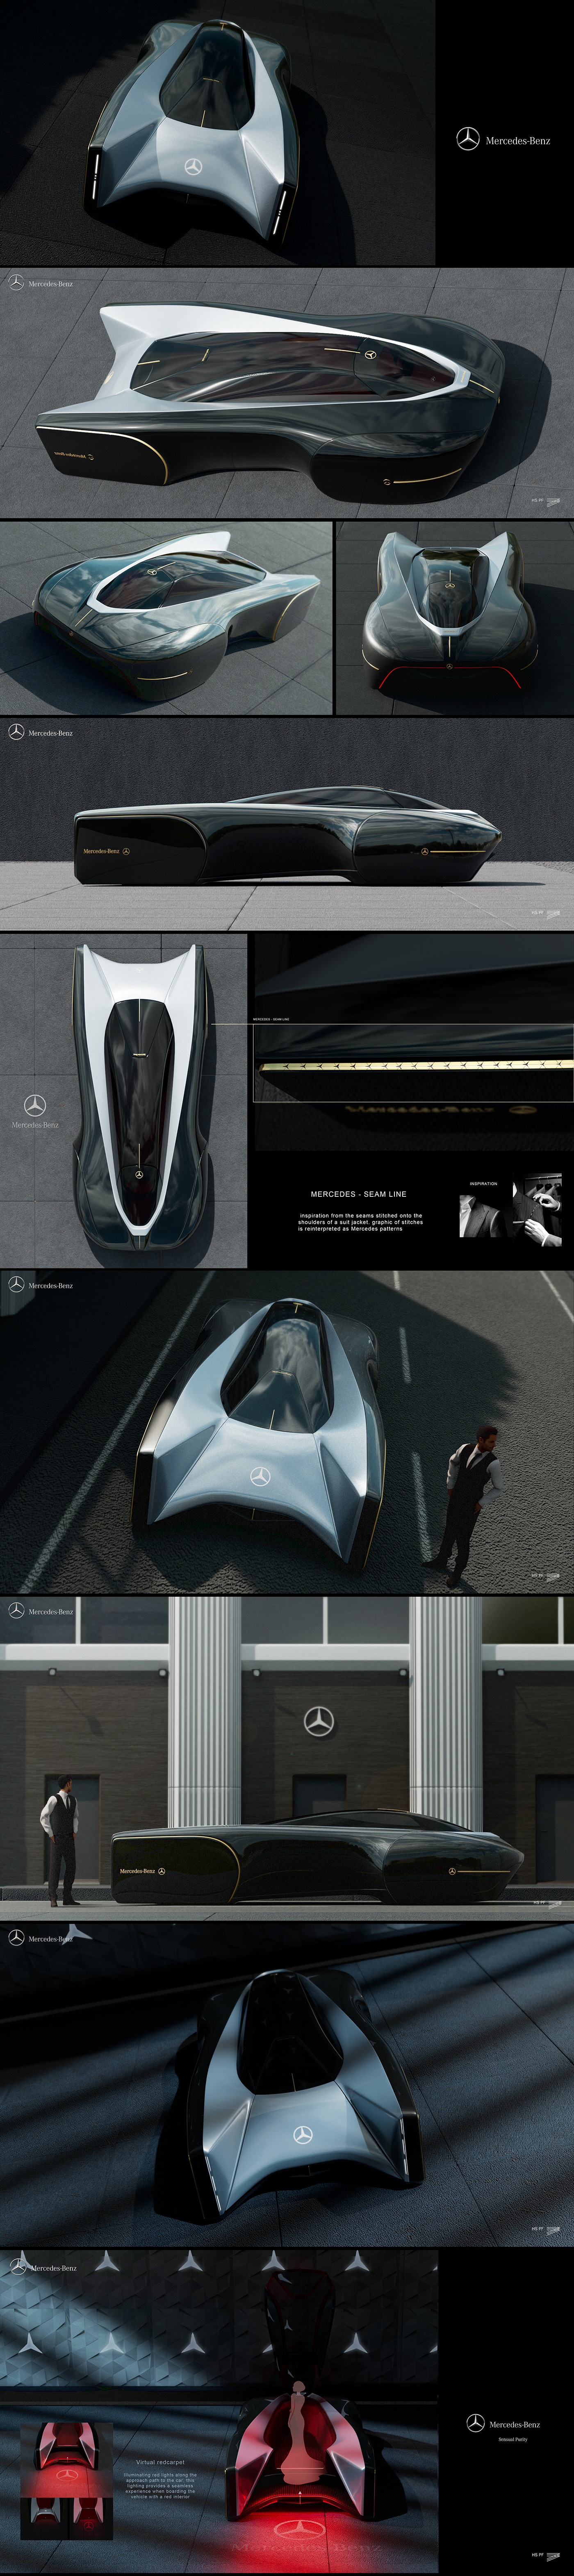 Transportation Design mercedes-benz iconic luxury concept cardesign sketch Automotive design car